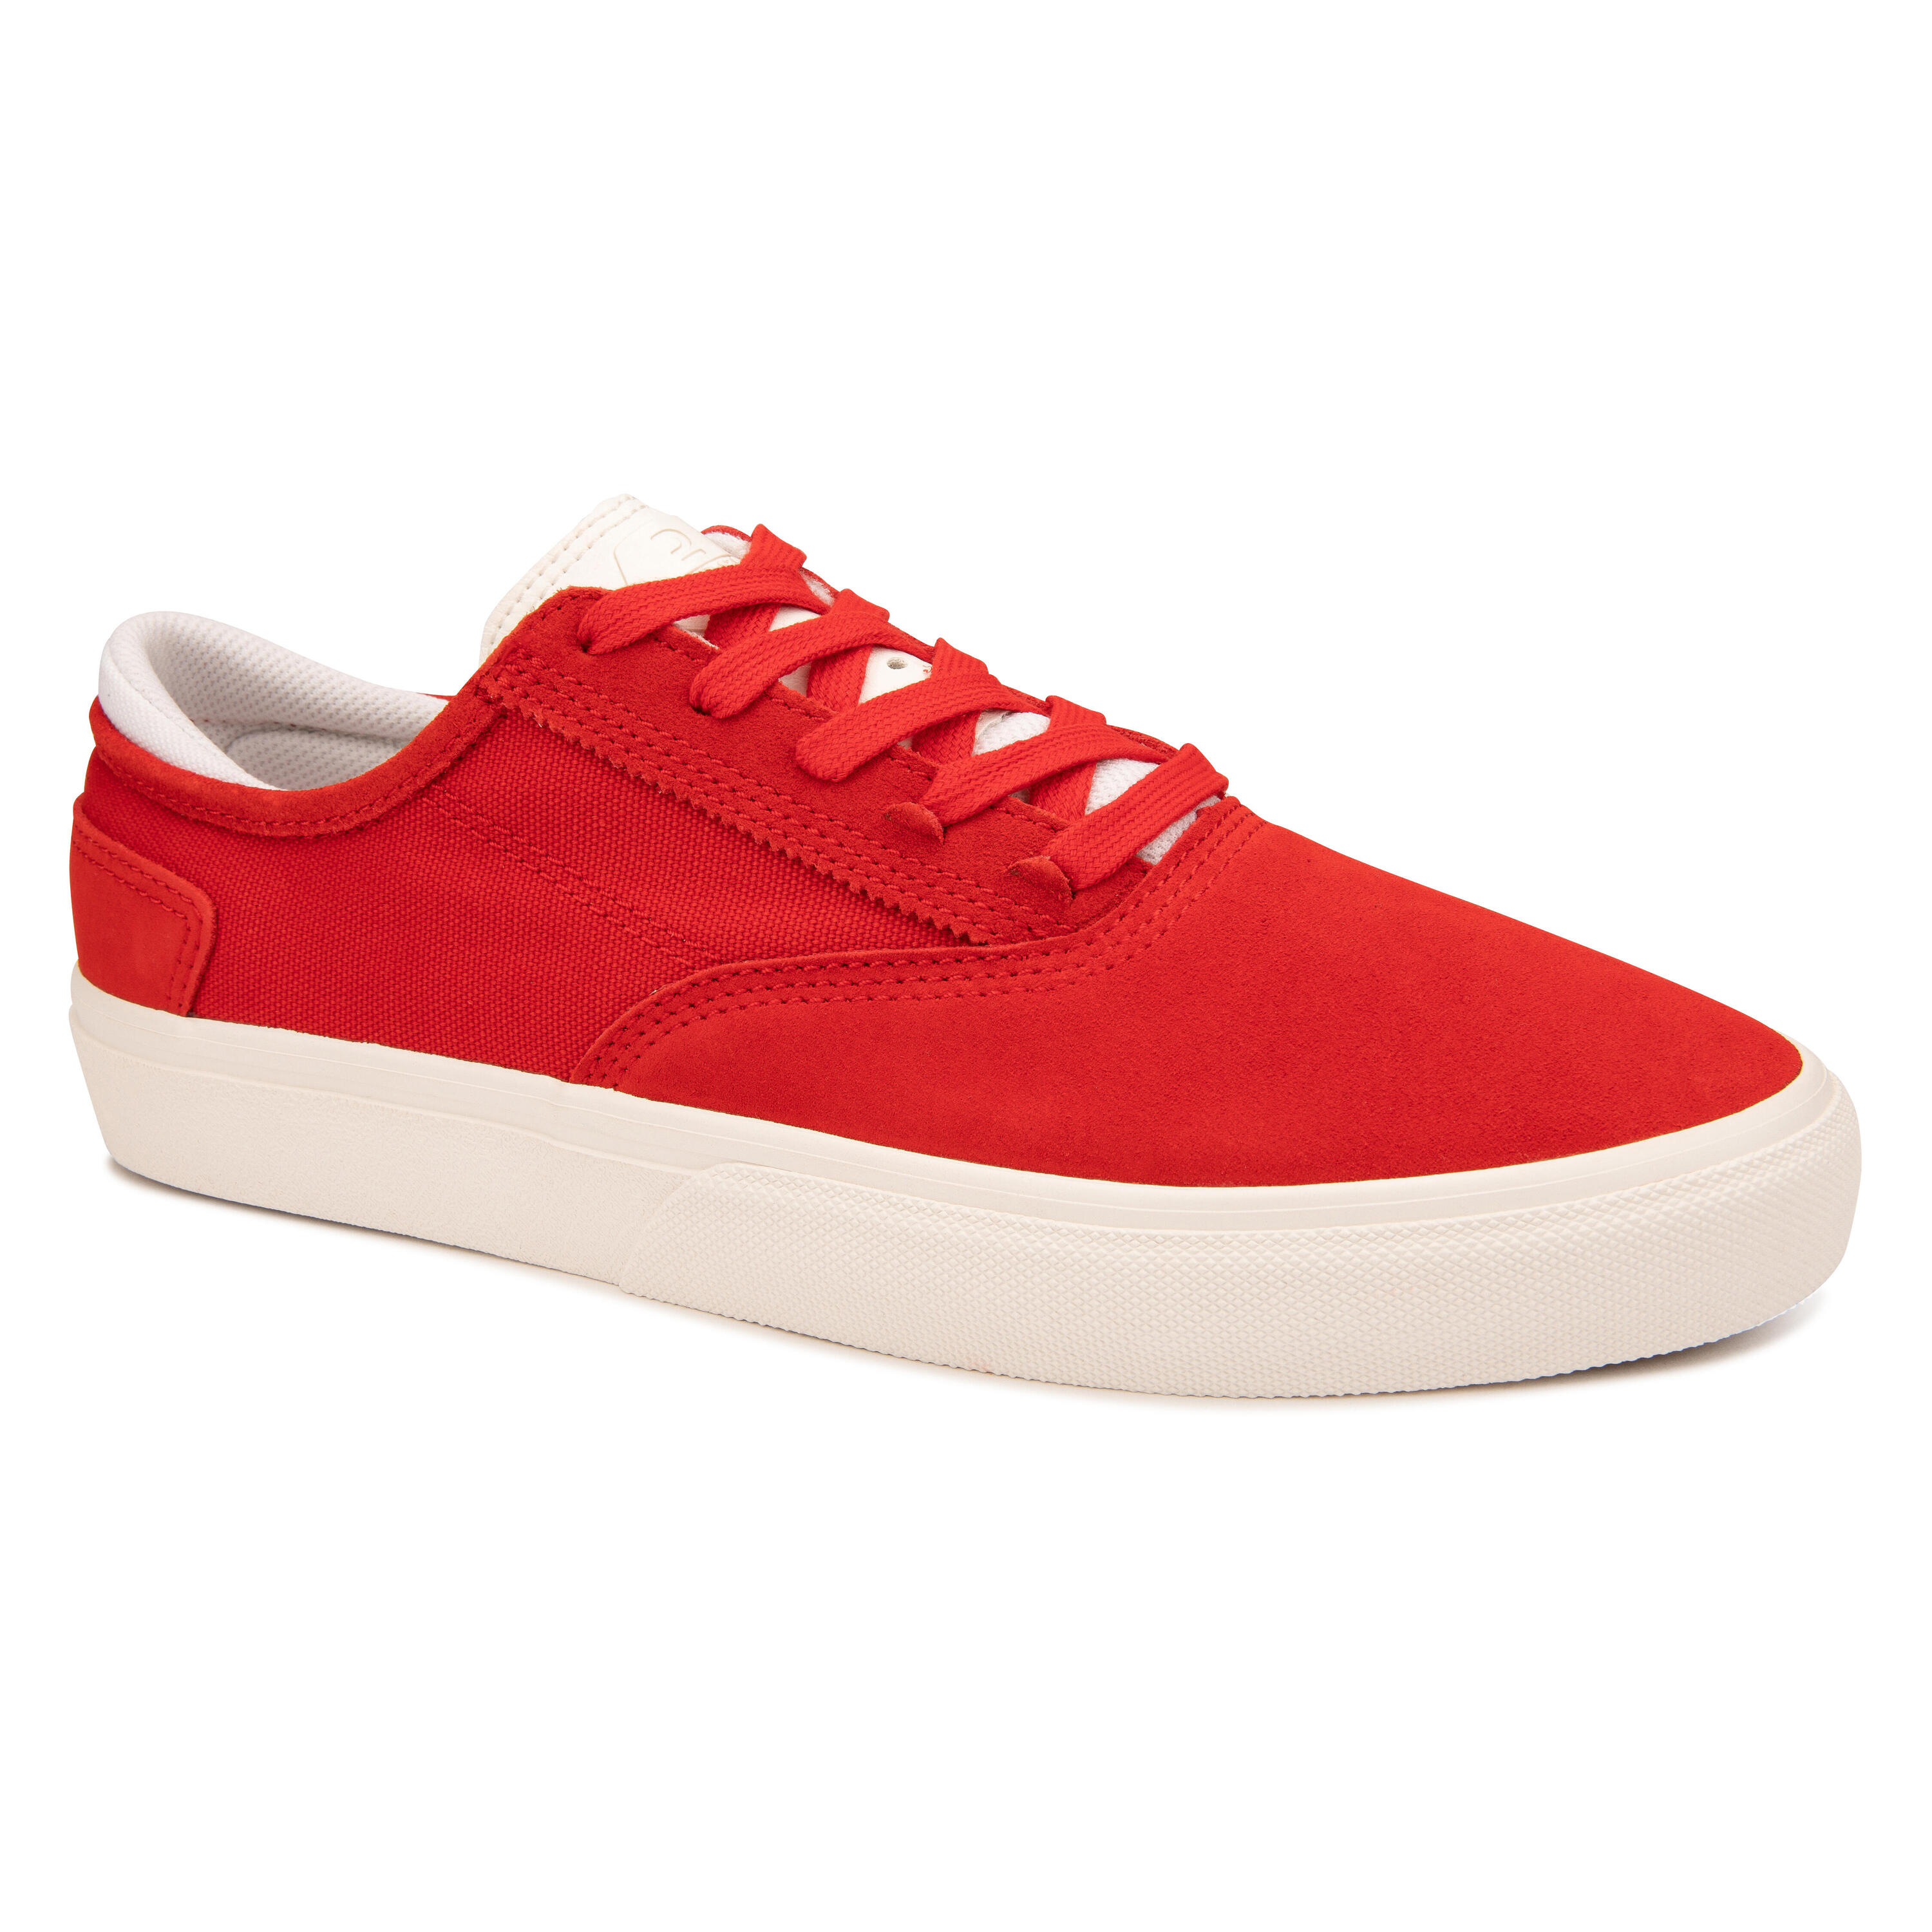 Adult Vulcanised Skate Shoes Vulca 500 II - Red/White 1/14